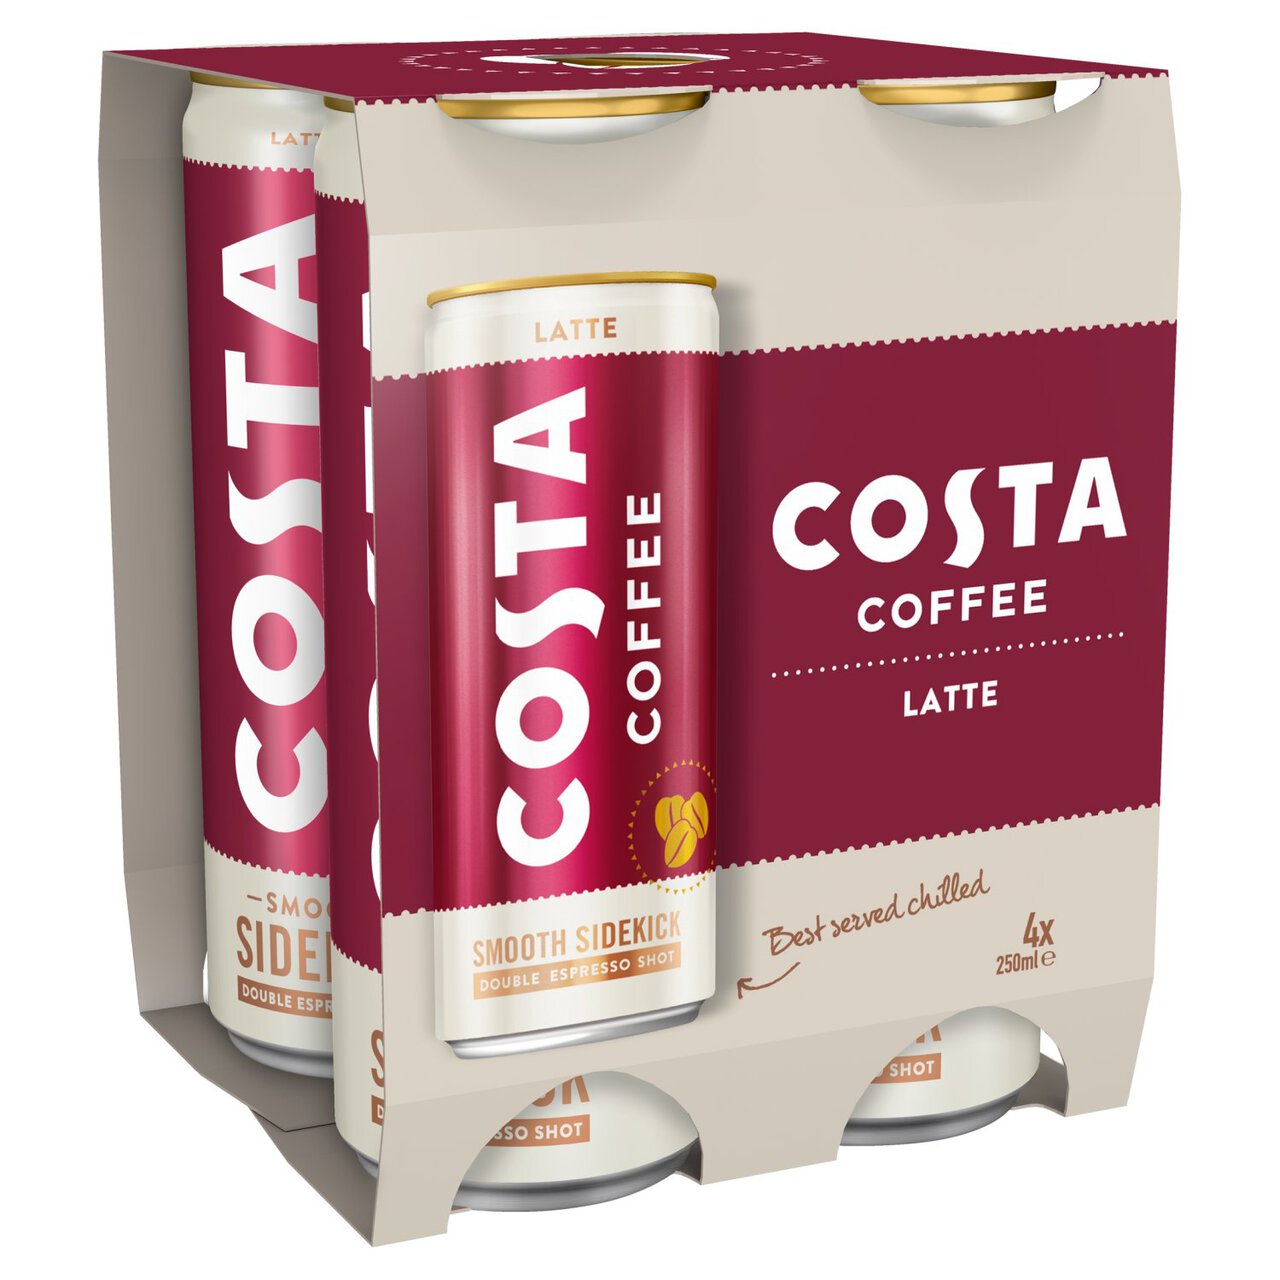 Costa Latte 4 x 250ml